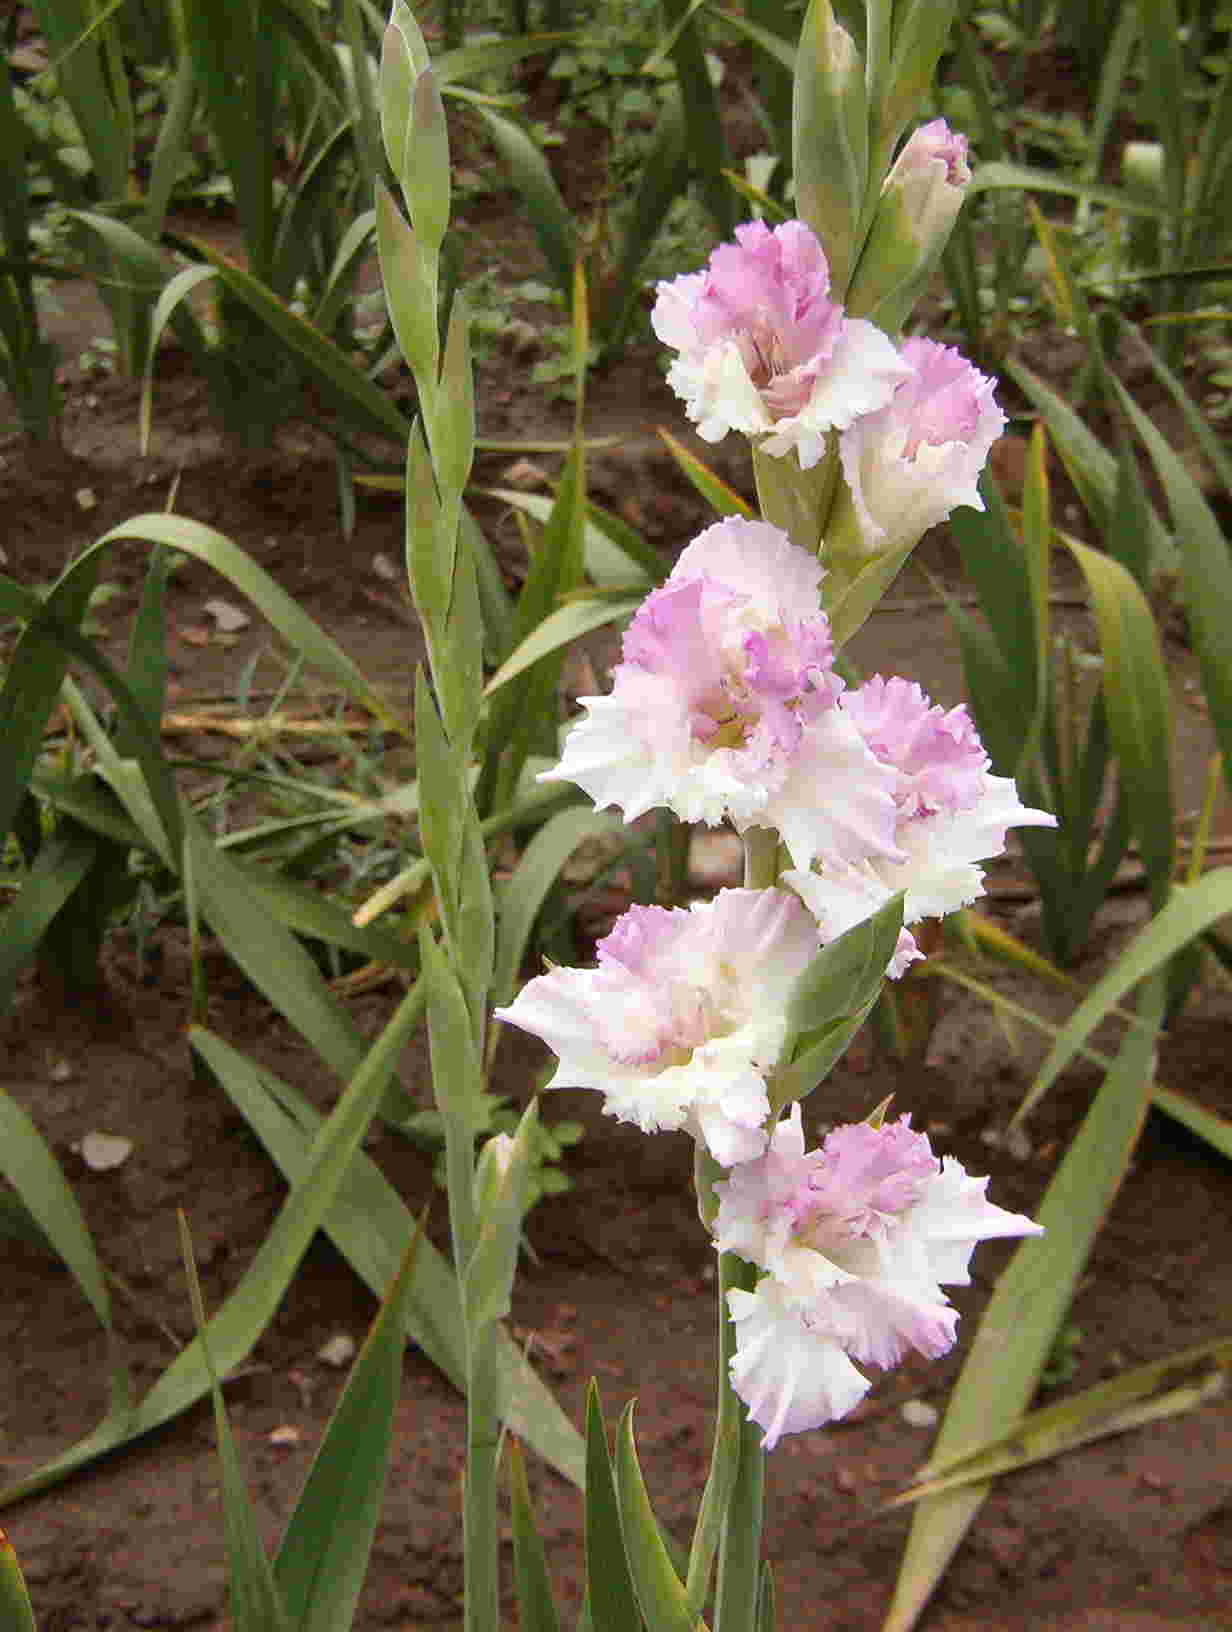 Orchid Lace